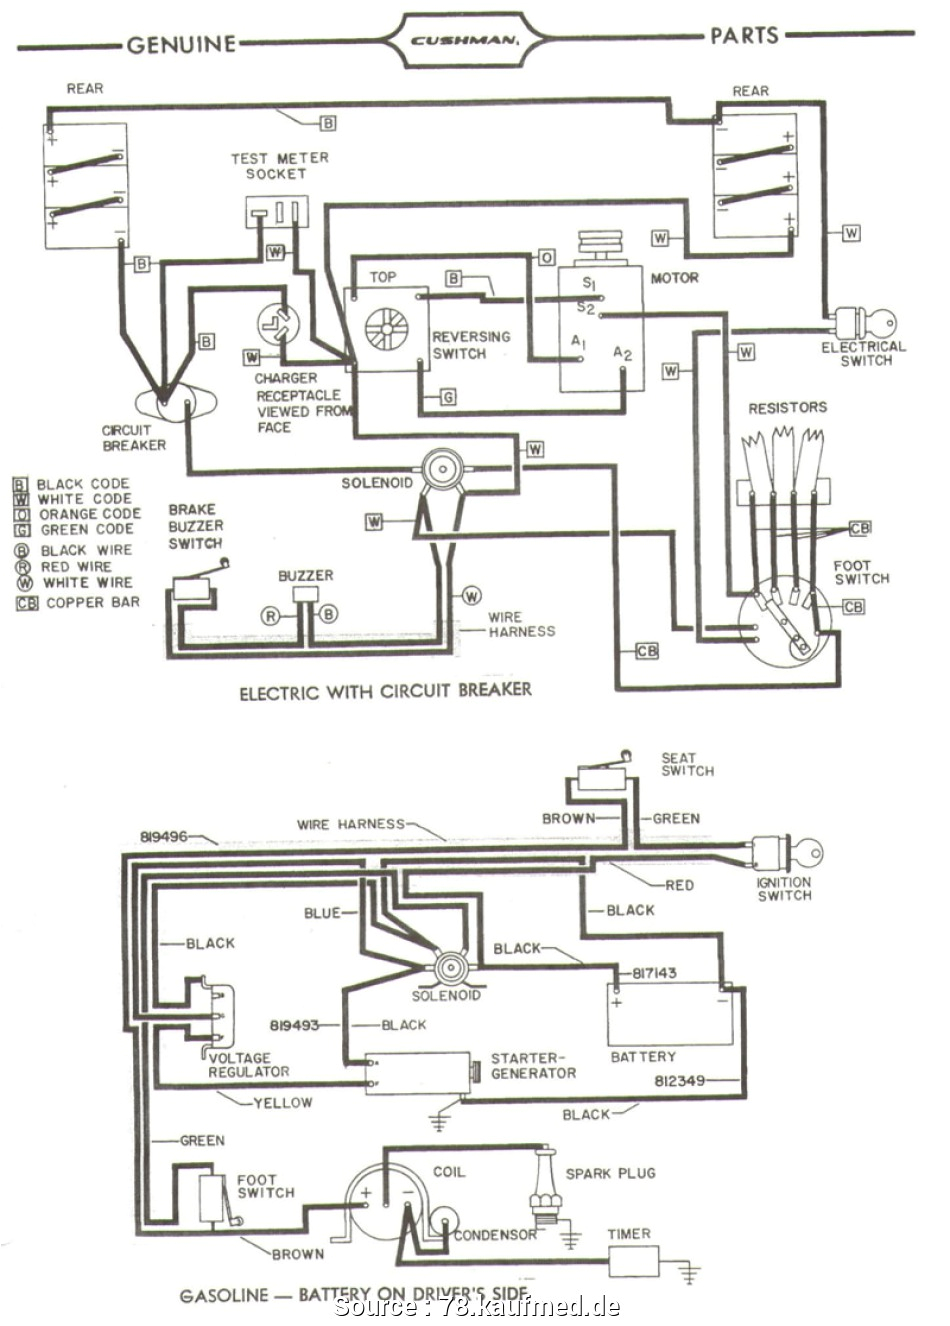 cushman wiring diagrams wiring diagrams konsult cushman wiring diagrams highlander cushman wiring diagram